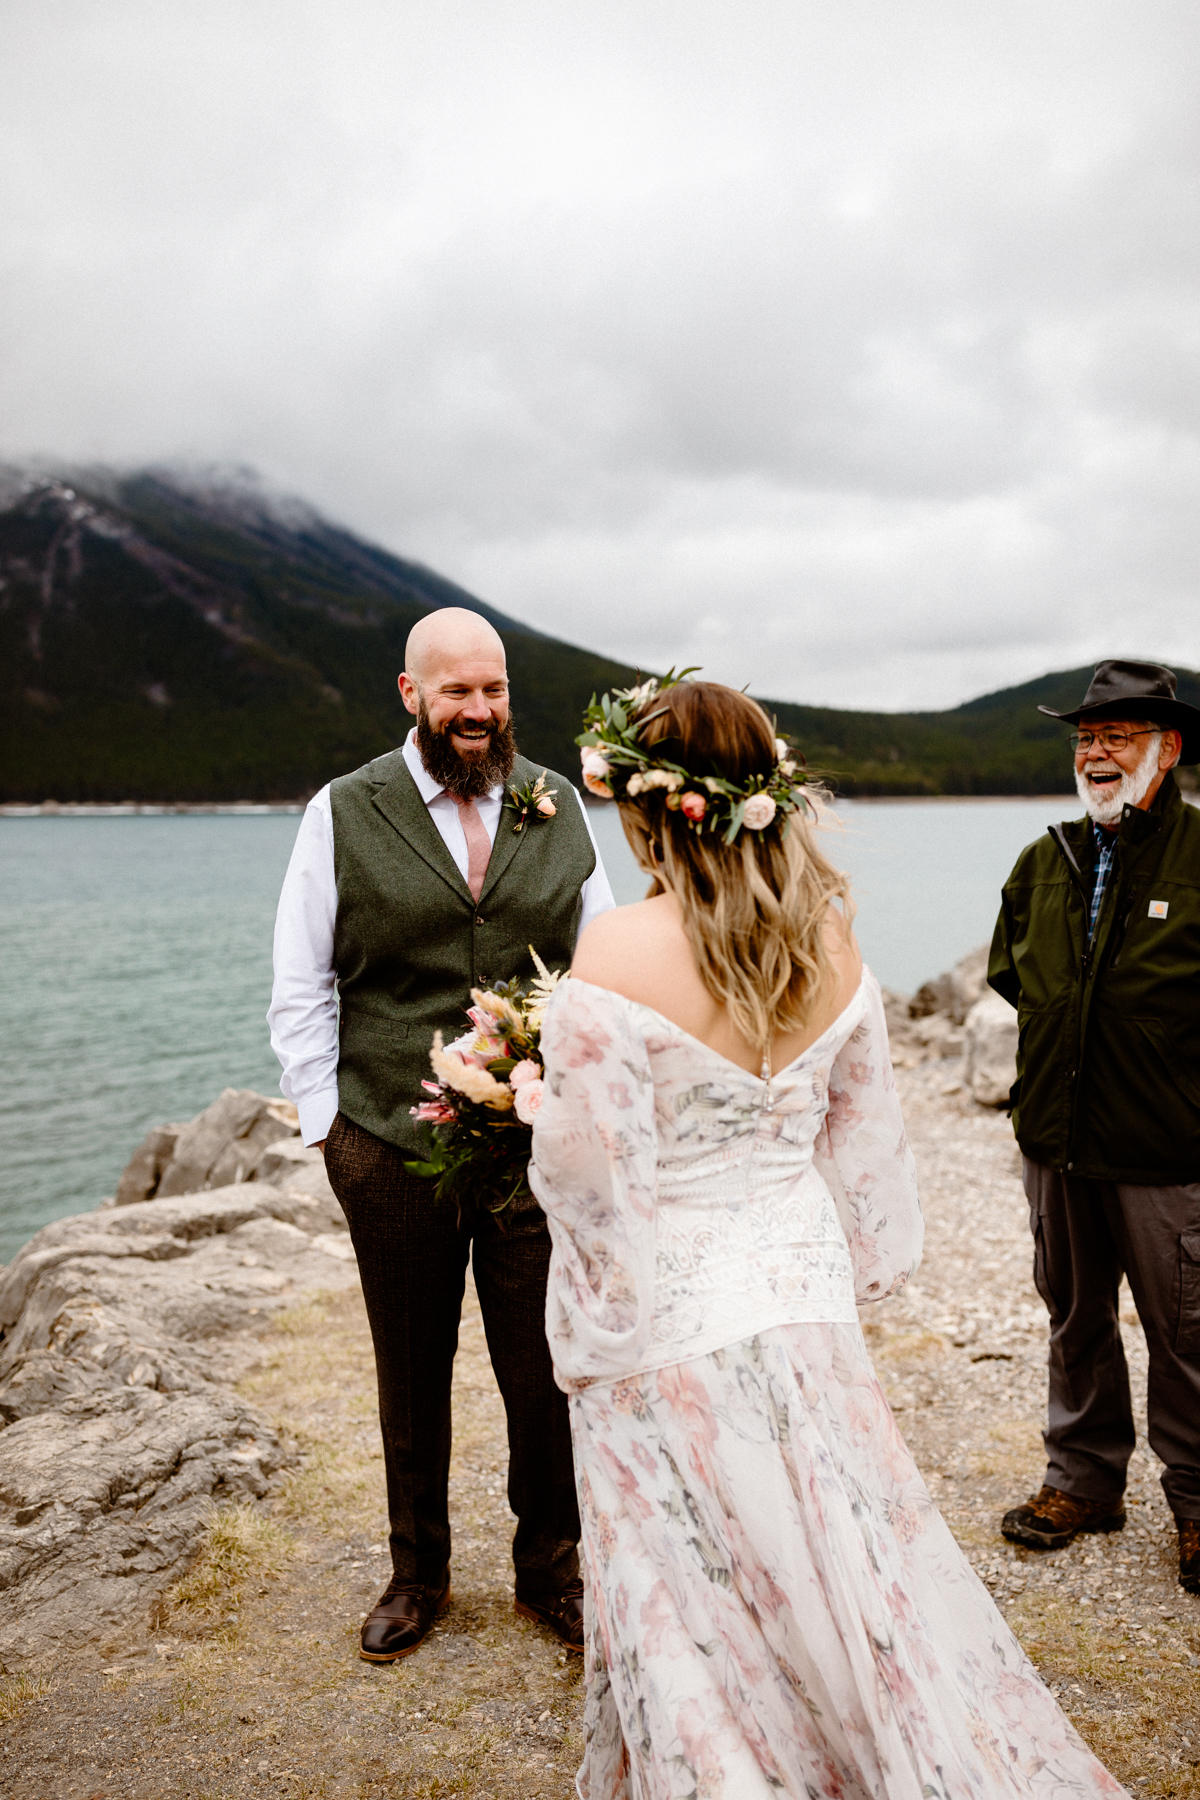 Stormy and Rainy Banff Wedding Photography - Photo 7